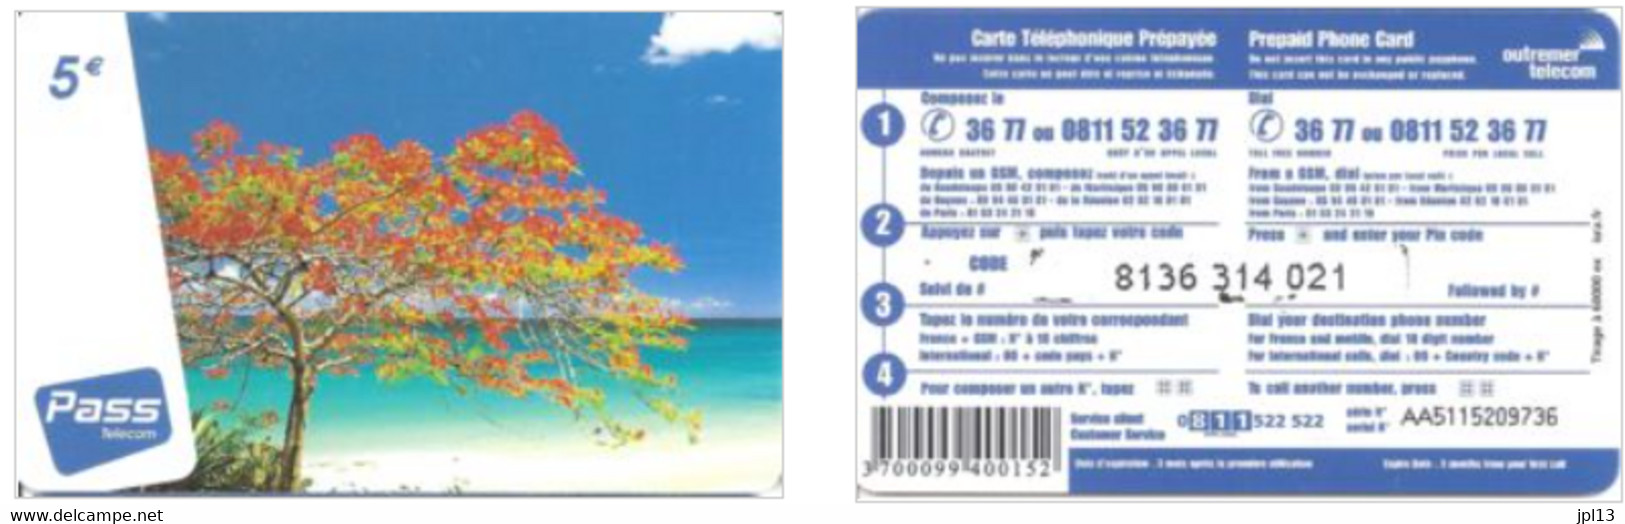 Carte Prépayée Outremer Telecom 5€ Flamboyant (Pass Telecom), Tirage 60.000 Ex., Série AA5115xxxxxx - Antilles (Françaises)